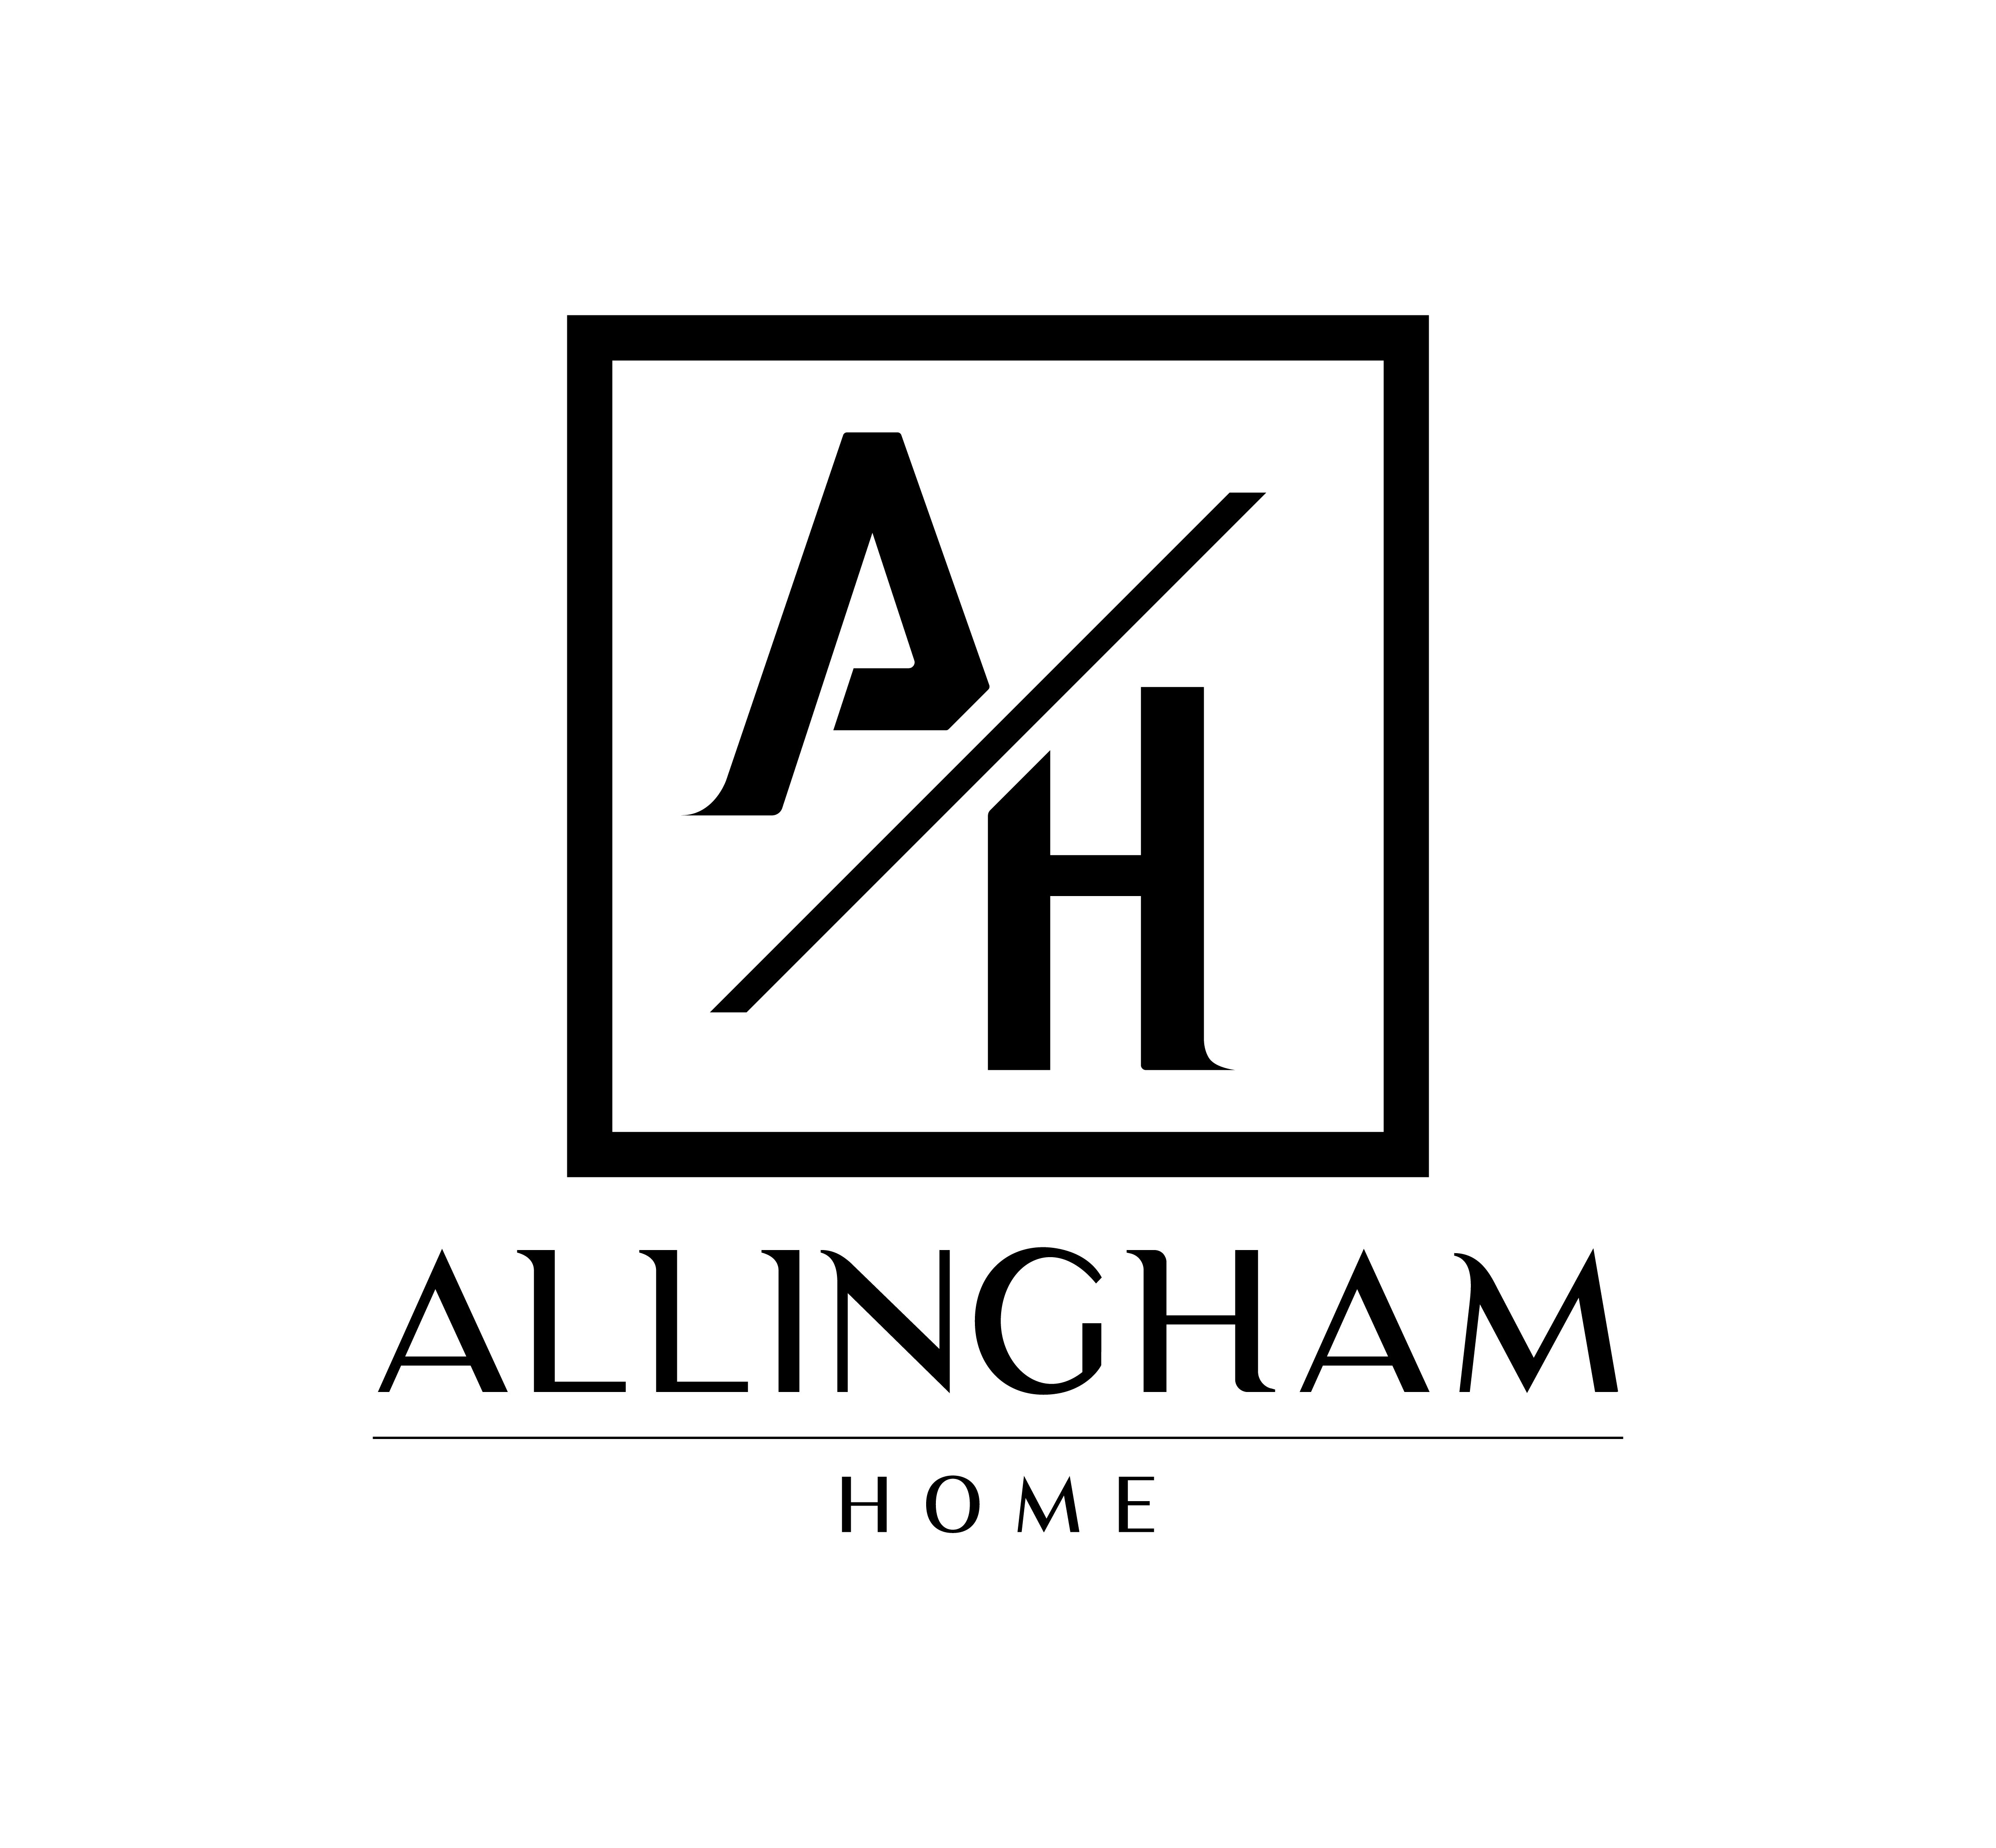 ALLINGHAM HOME